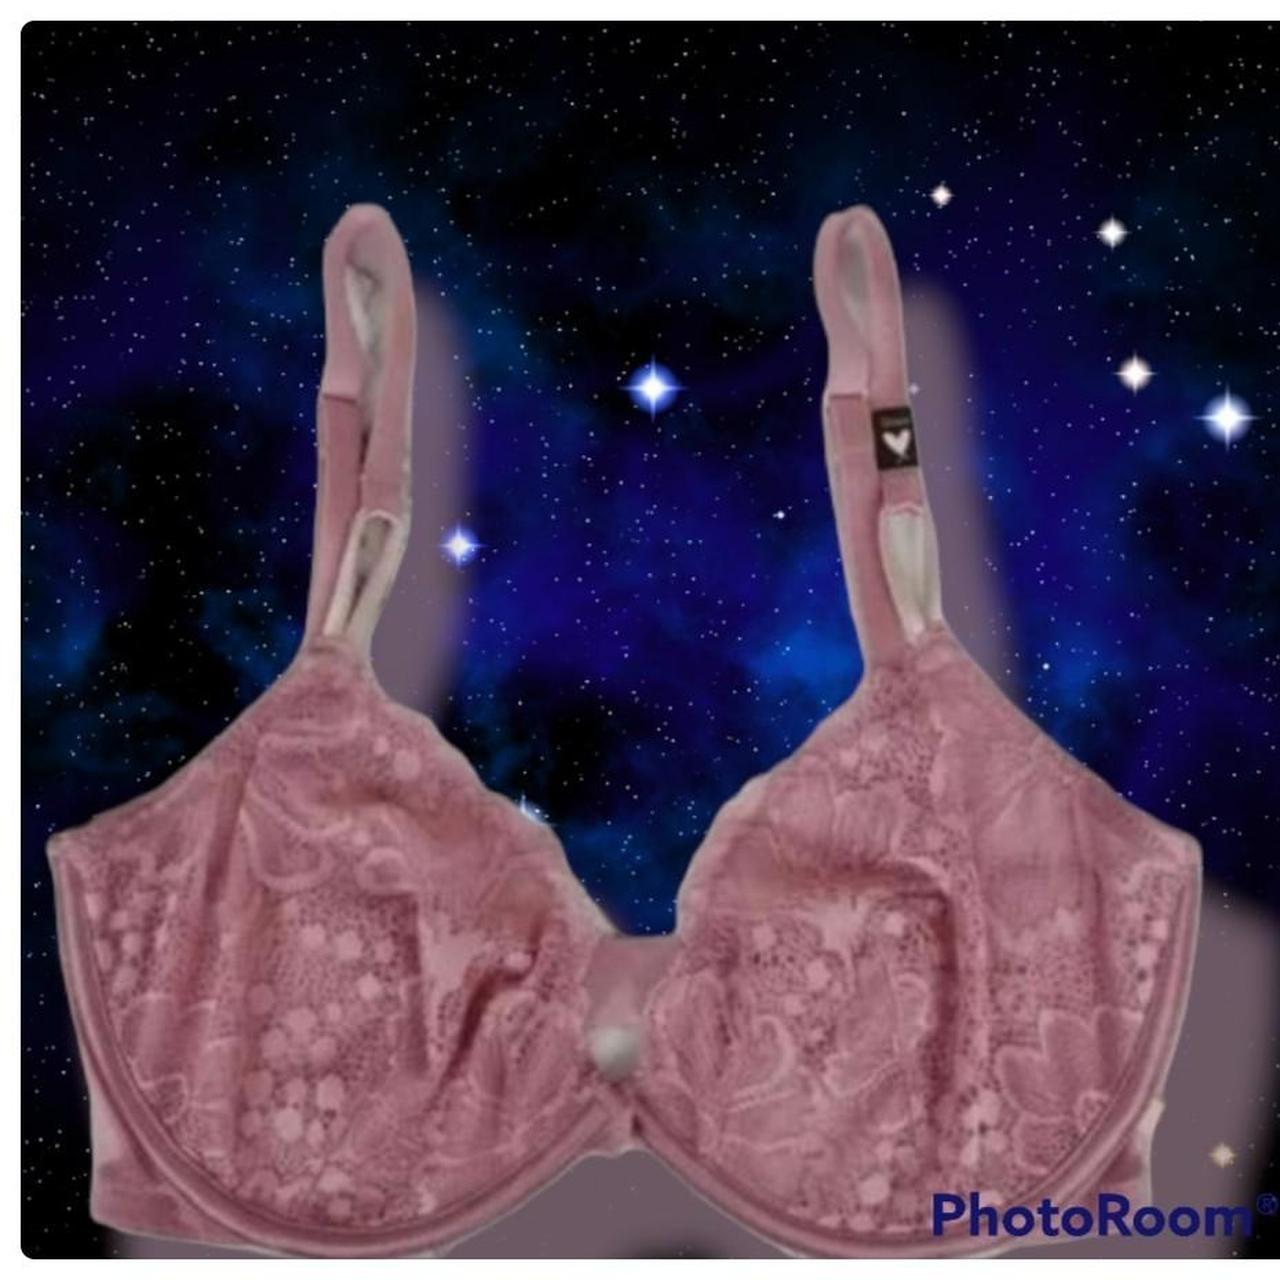 Bundle of 2 Victoria's Secret bras 32ddd sister size 34DD